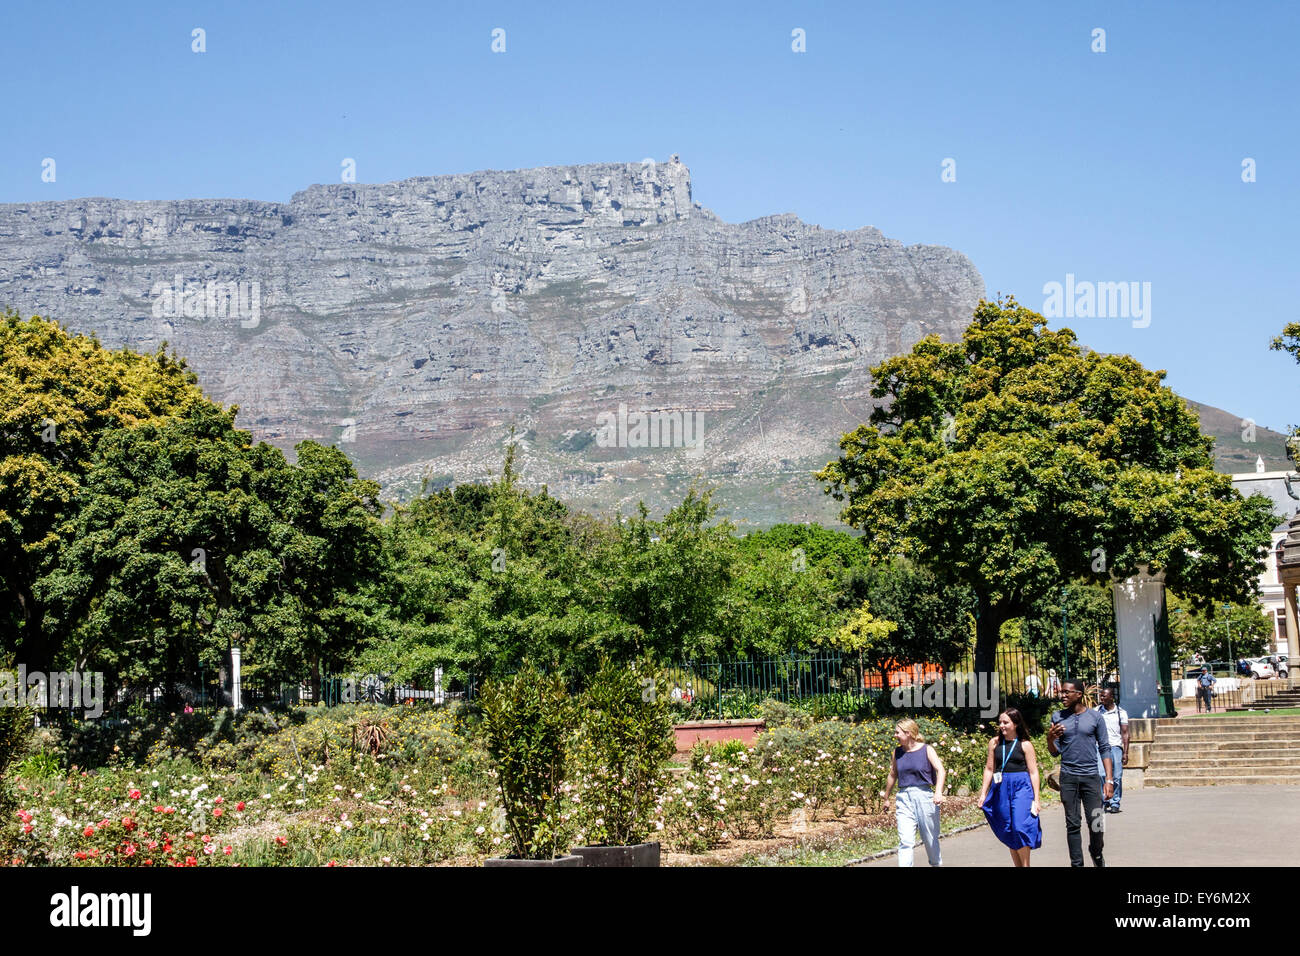 Cape Town South Africa,City Centre,center,Government Avenue,The Company's Garden,public park,Table Mountain National Park,Black man men male,SAfri1503 Stock Photo